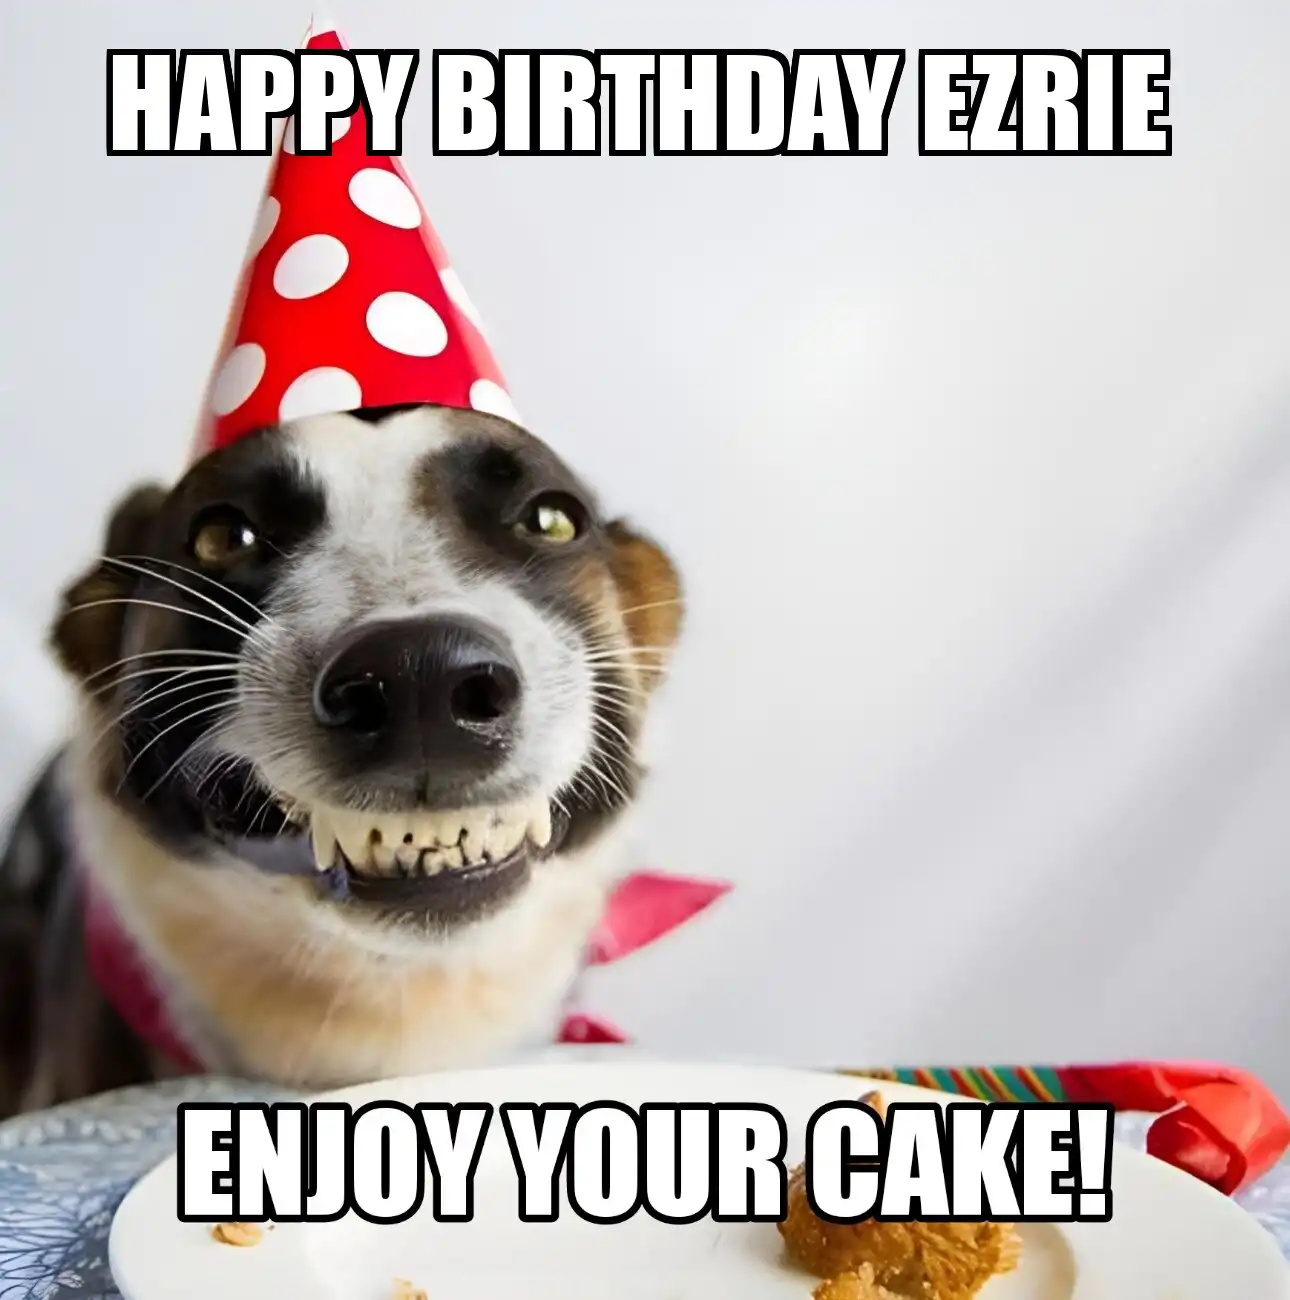 Happy Birthday Ezrie Enjoy Your Cake Dog Meme